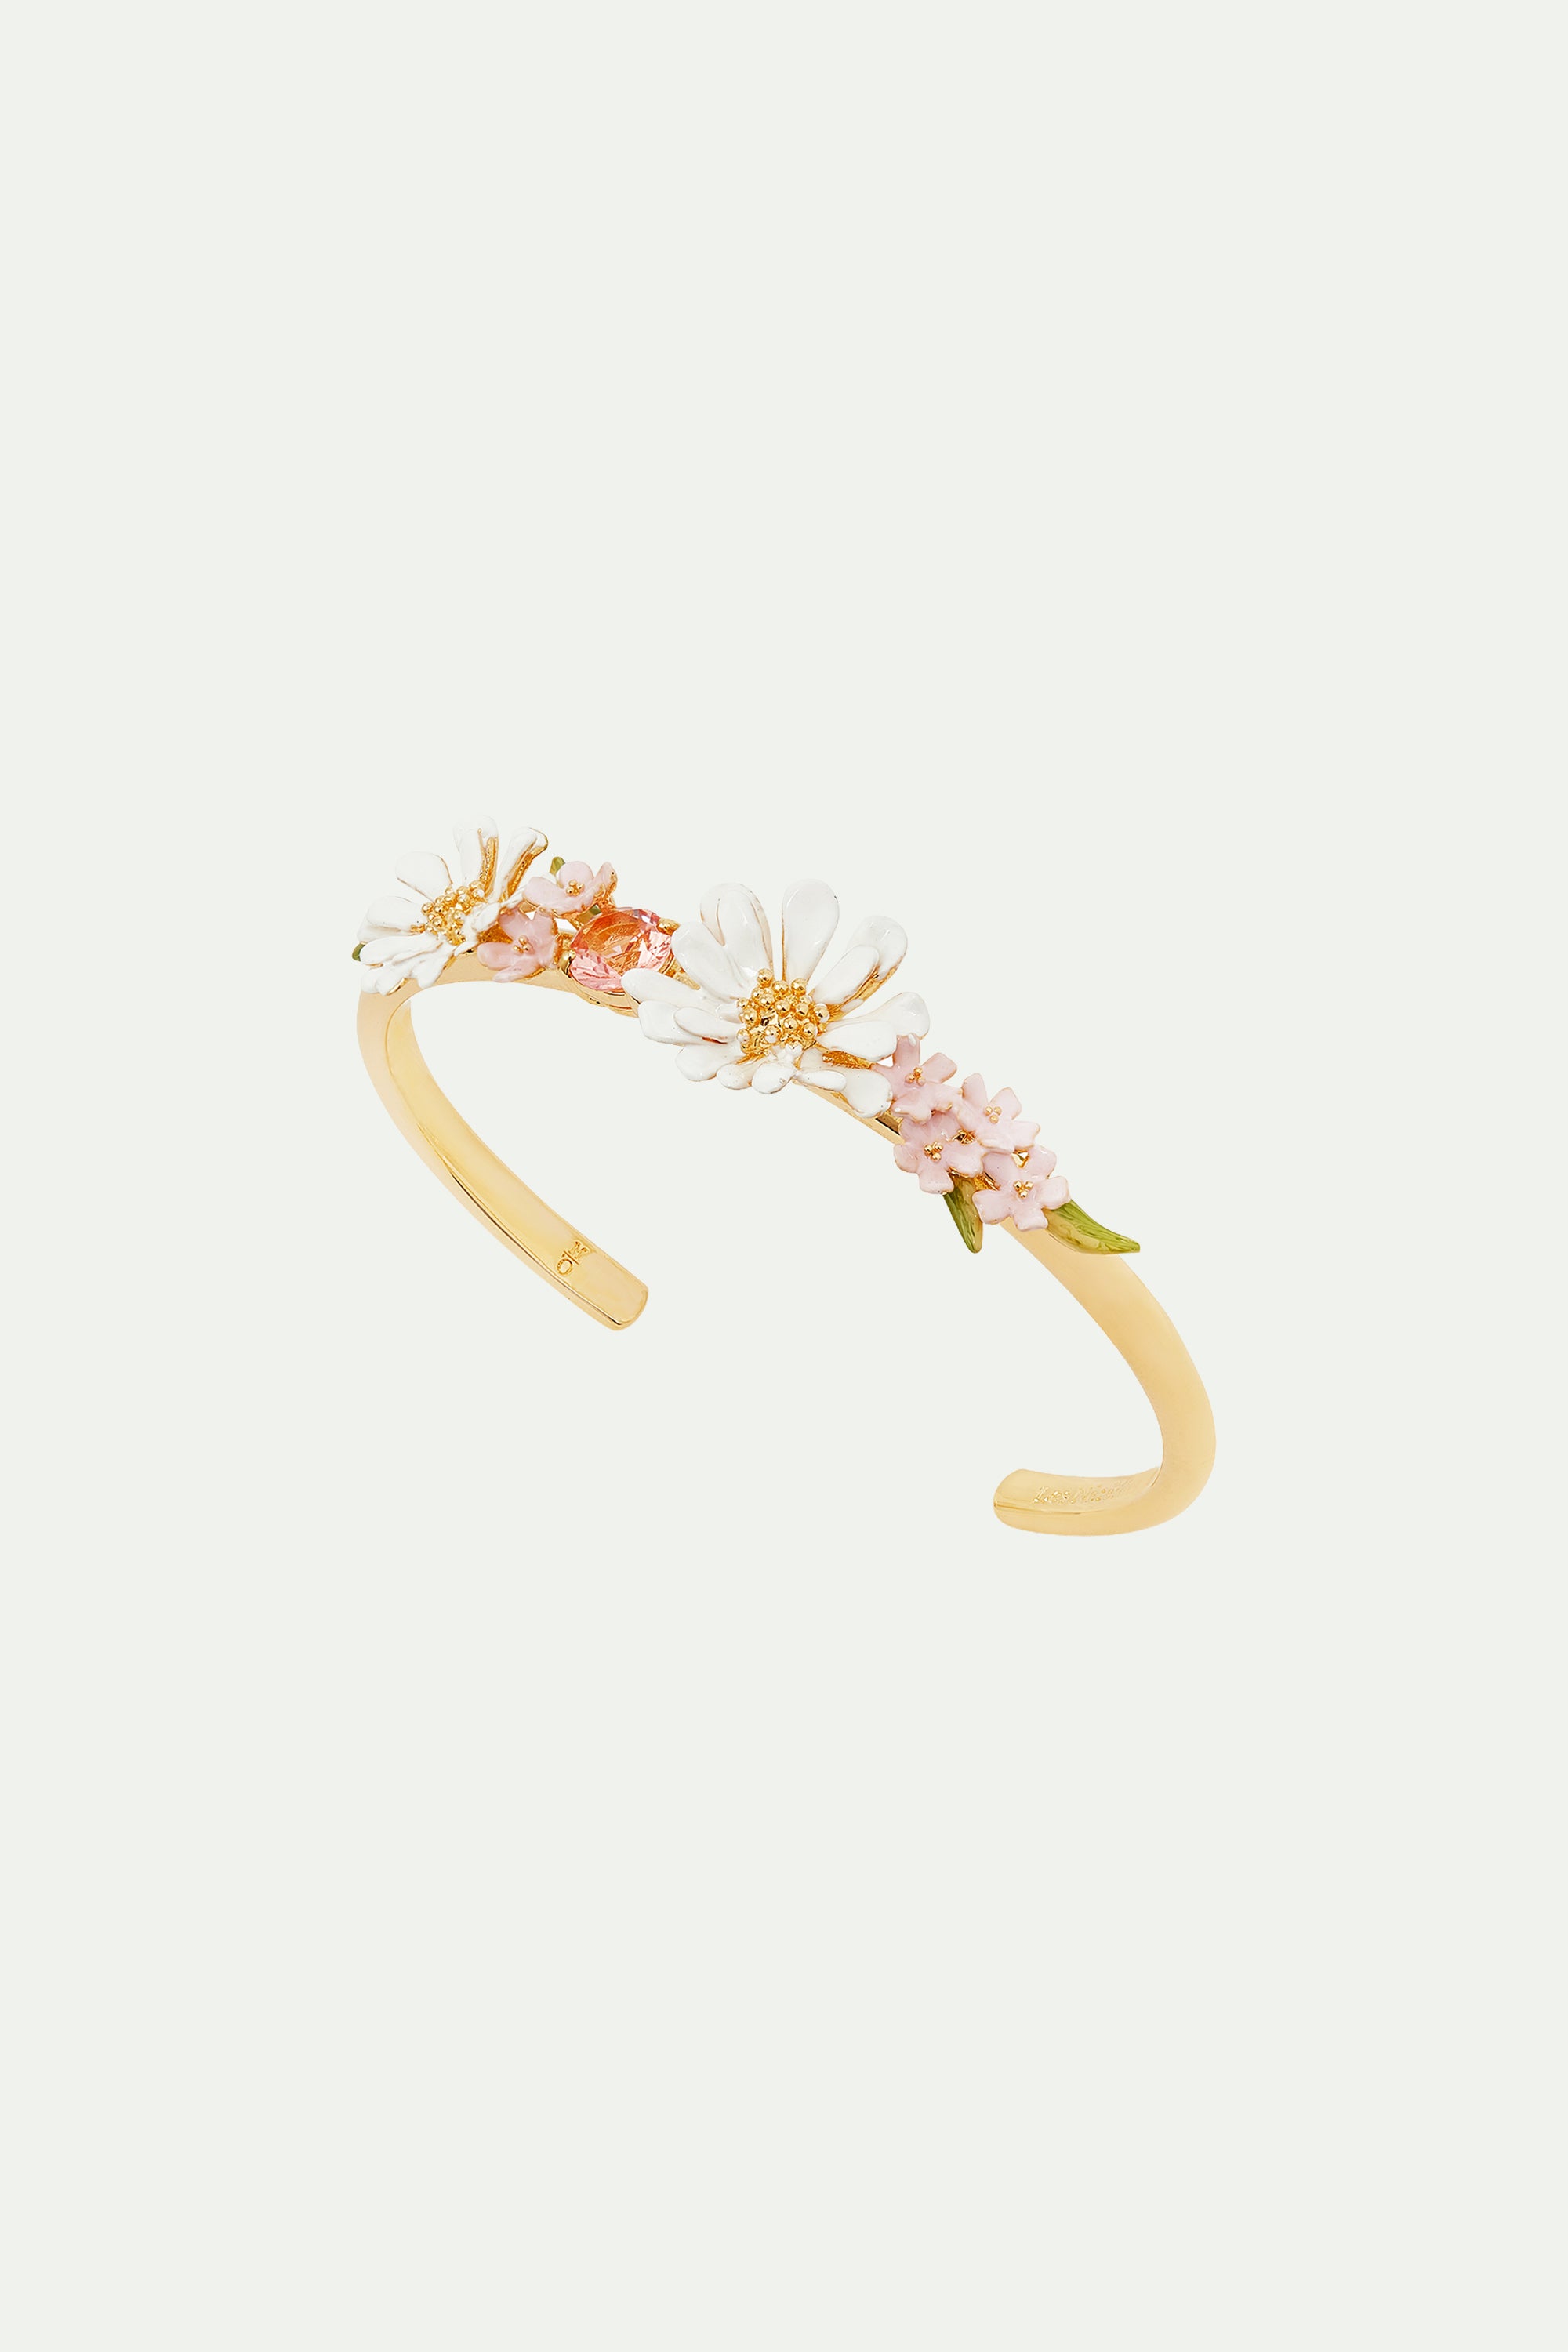 Flower bouquet and round stone bangle bracelet